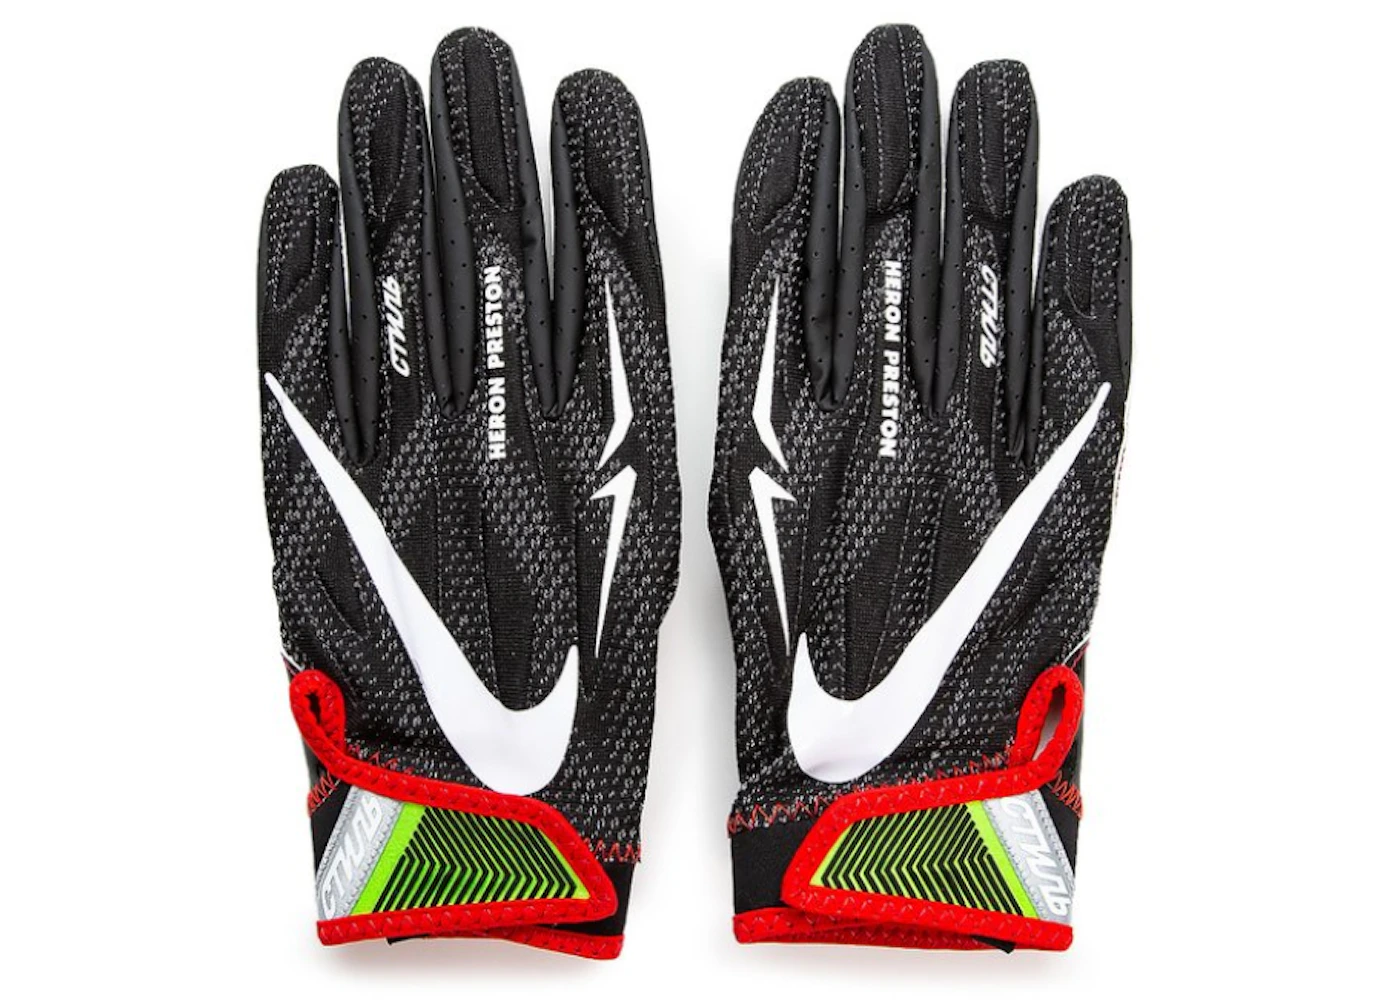 x Heron Preston Superbad 4.5 Football Gloves Black/White - SS19 Men's US